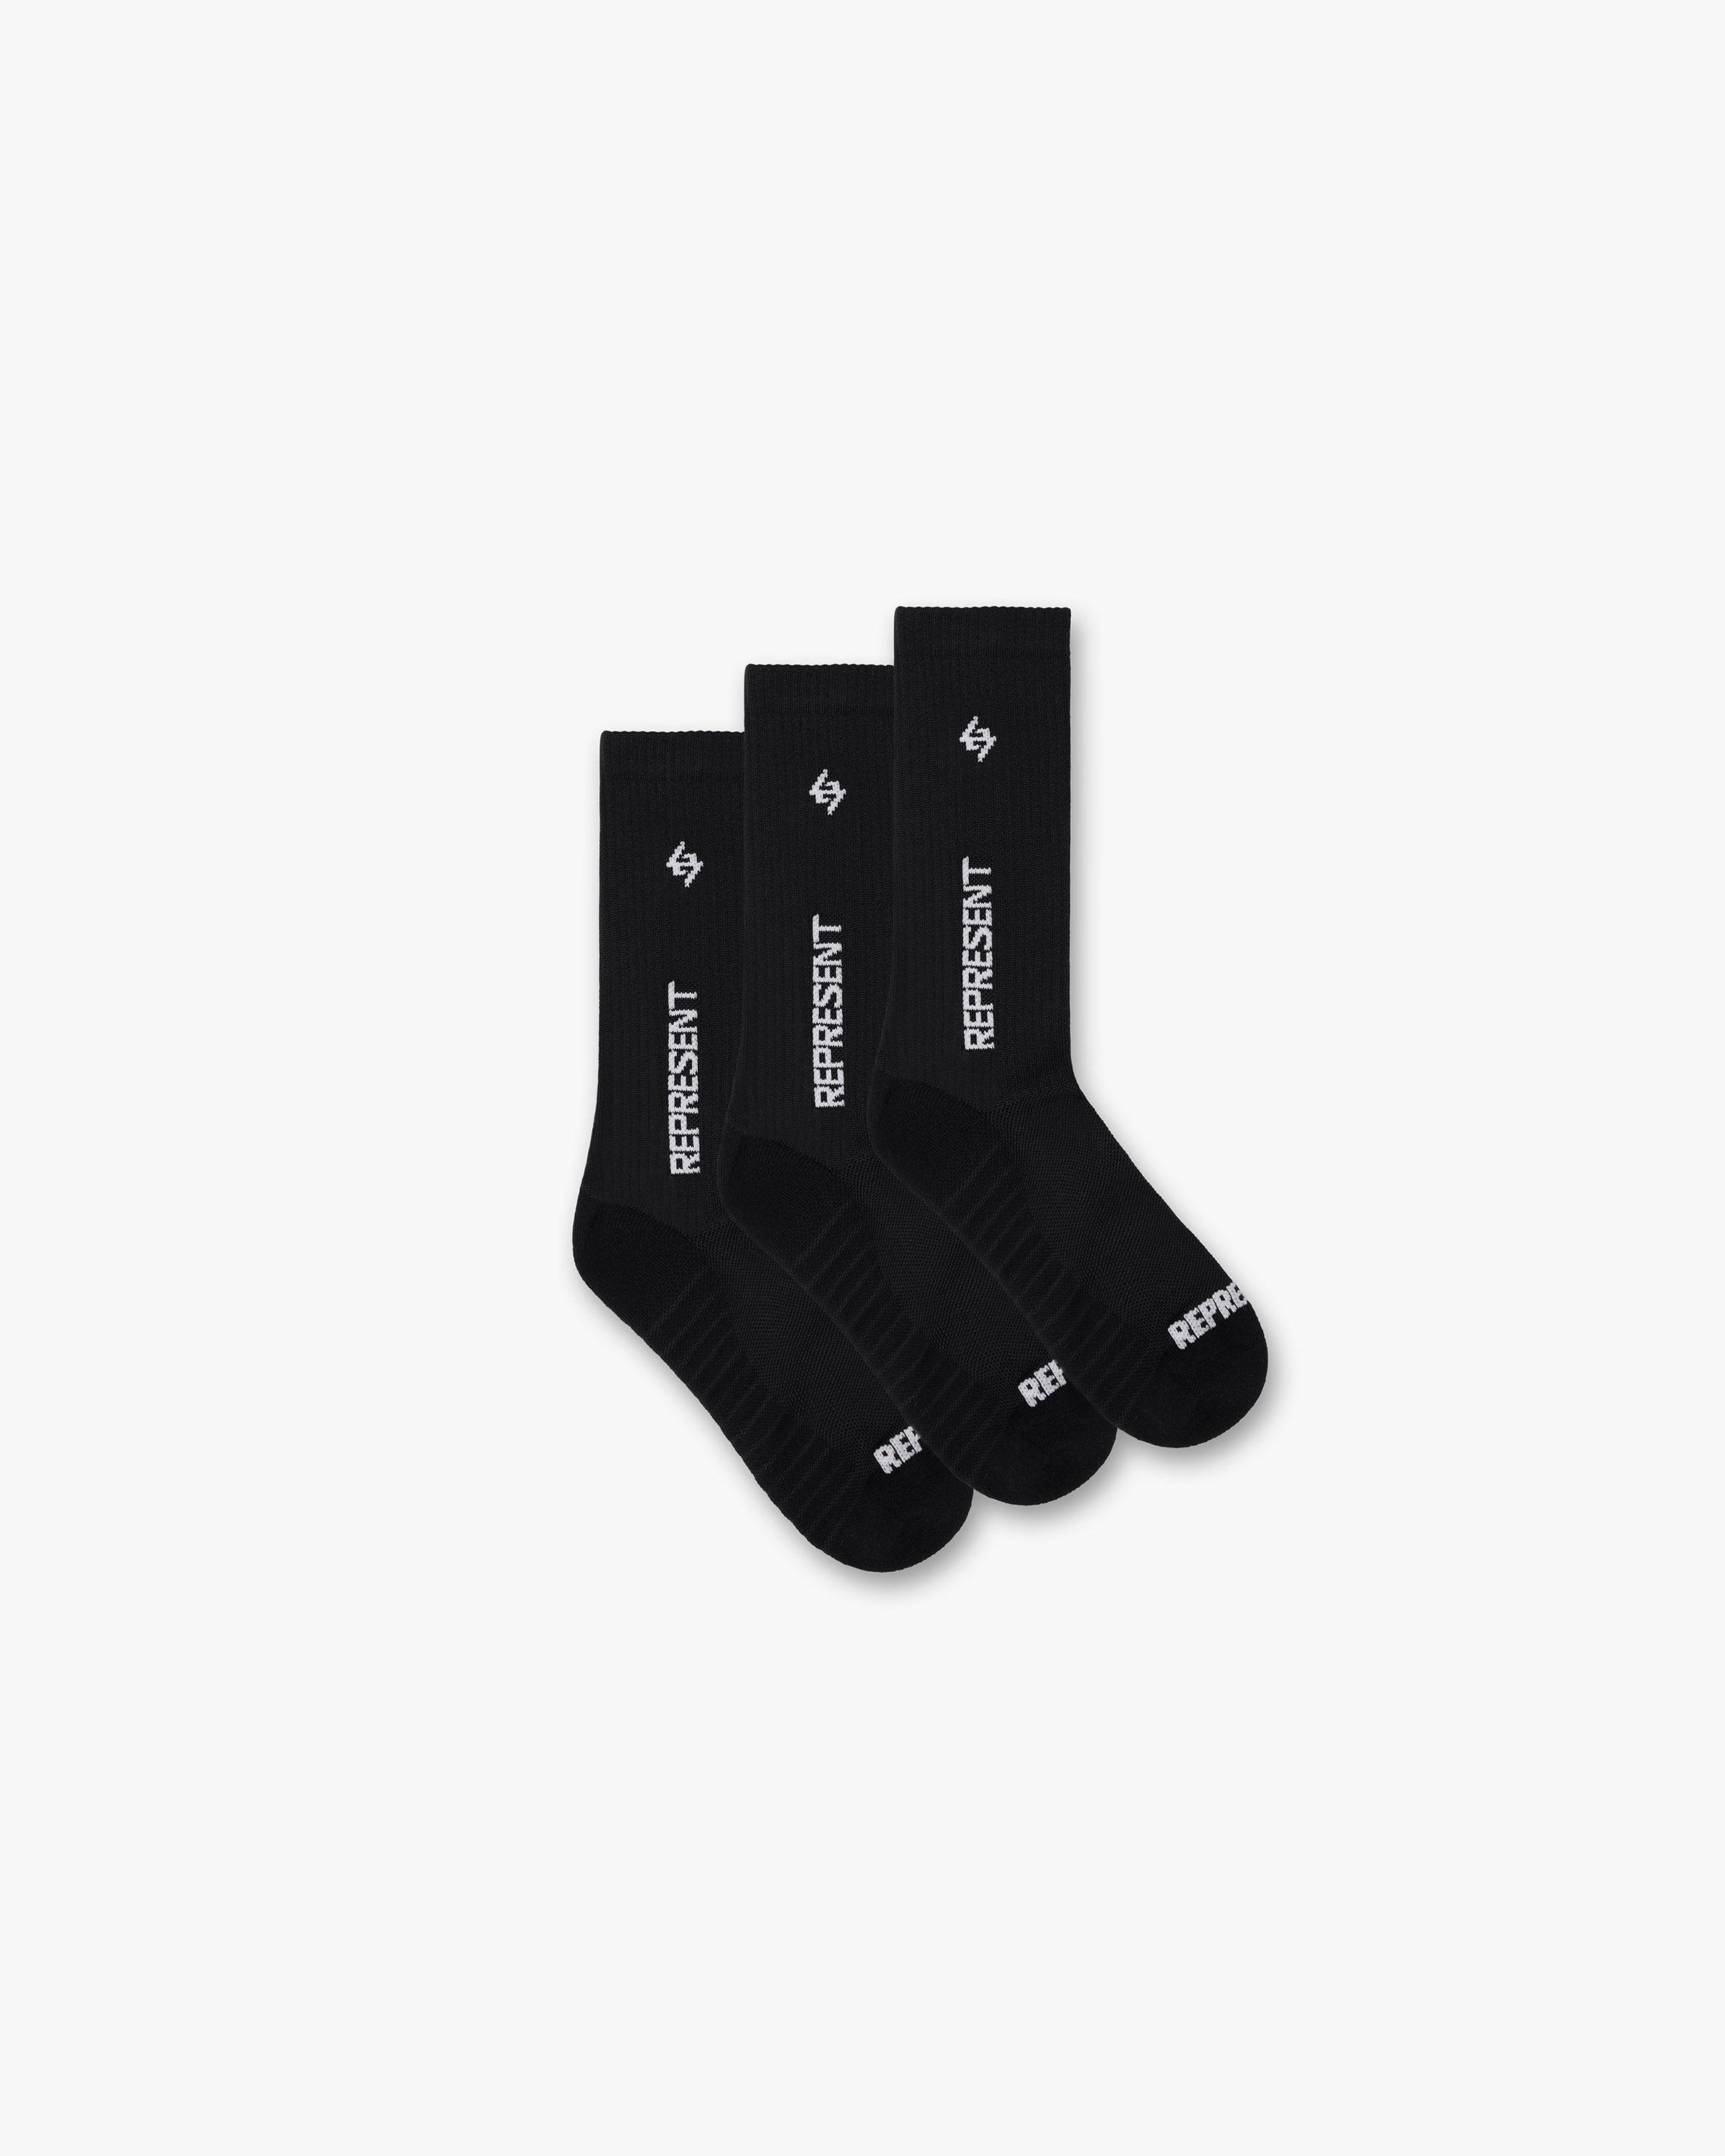 Team 247 Socks | 3 Pack | Black Accessories 247 | Represent Clo